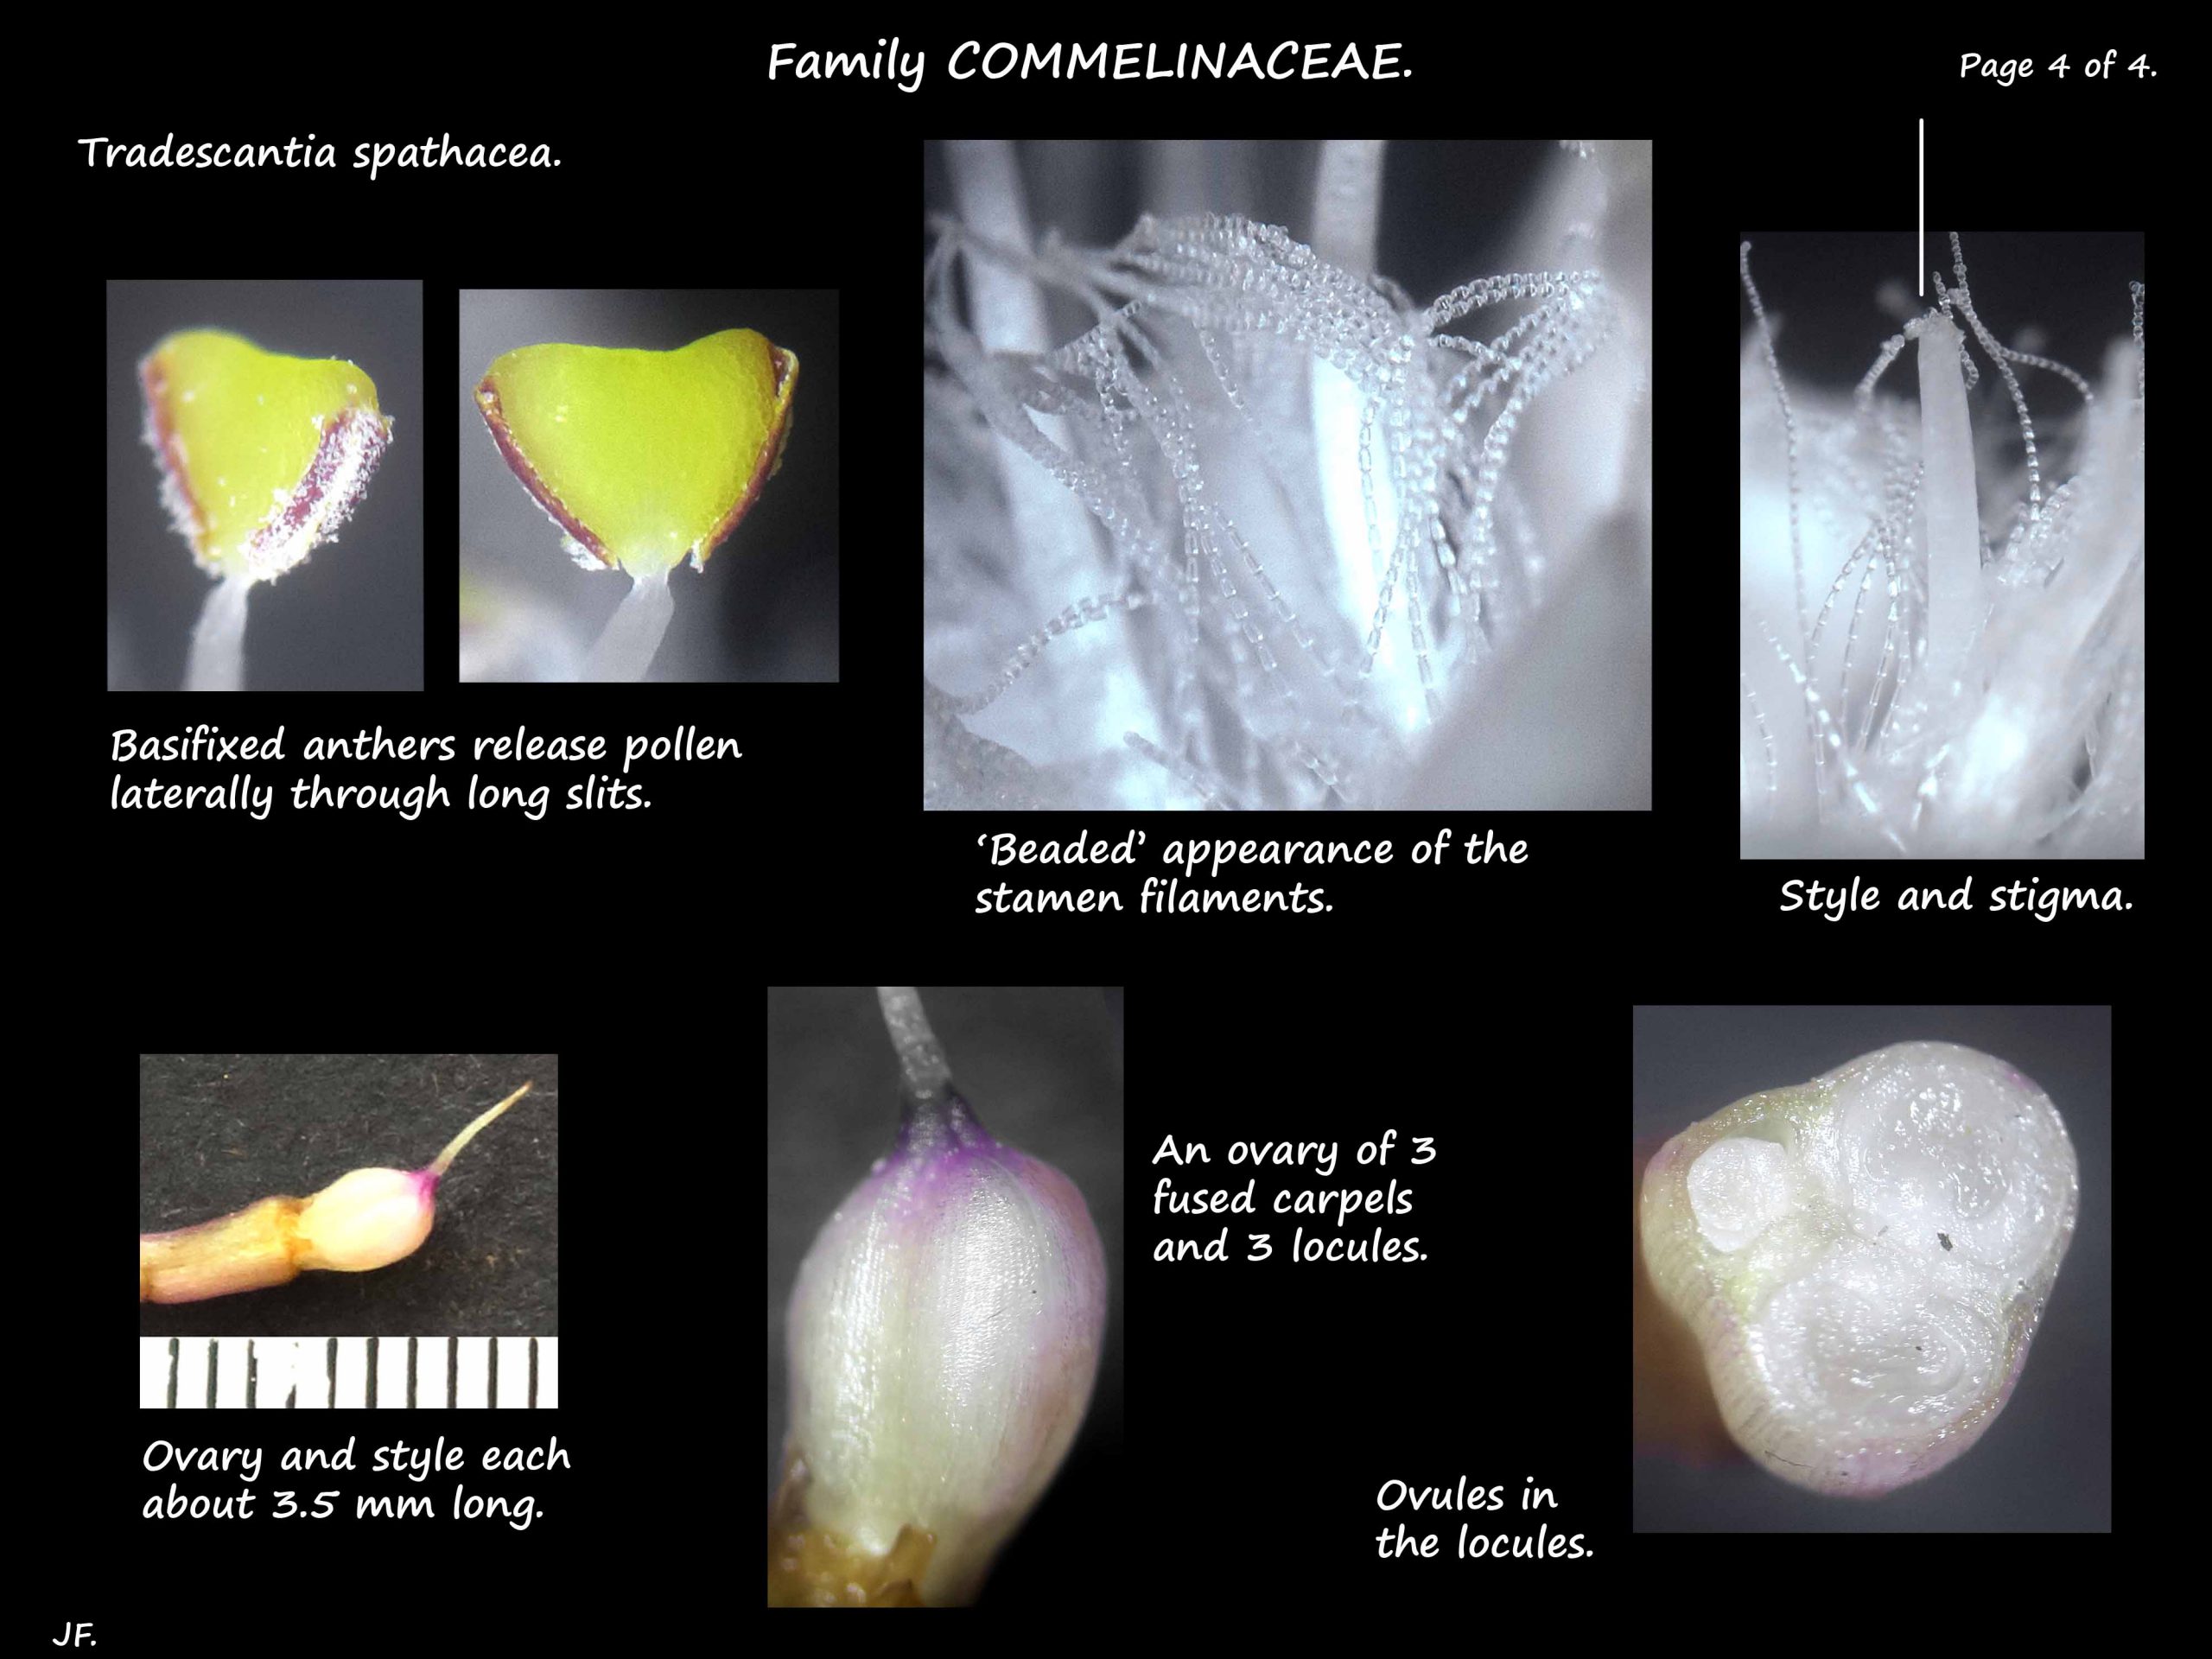 4 Tradescantia spathacea stamens & ovary